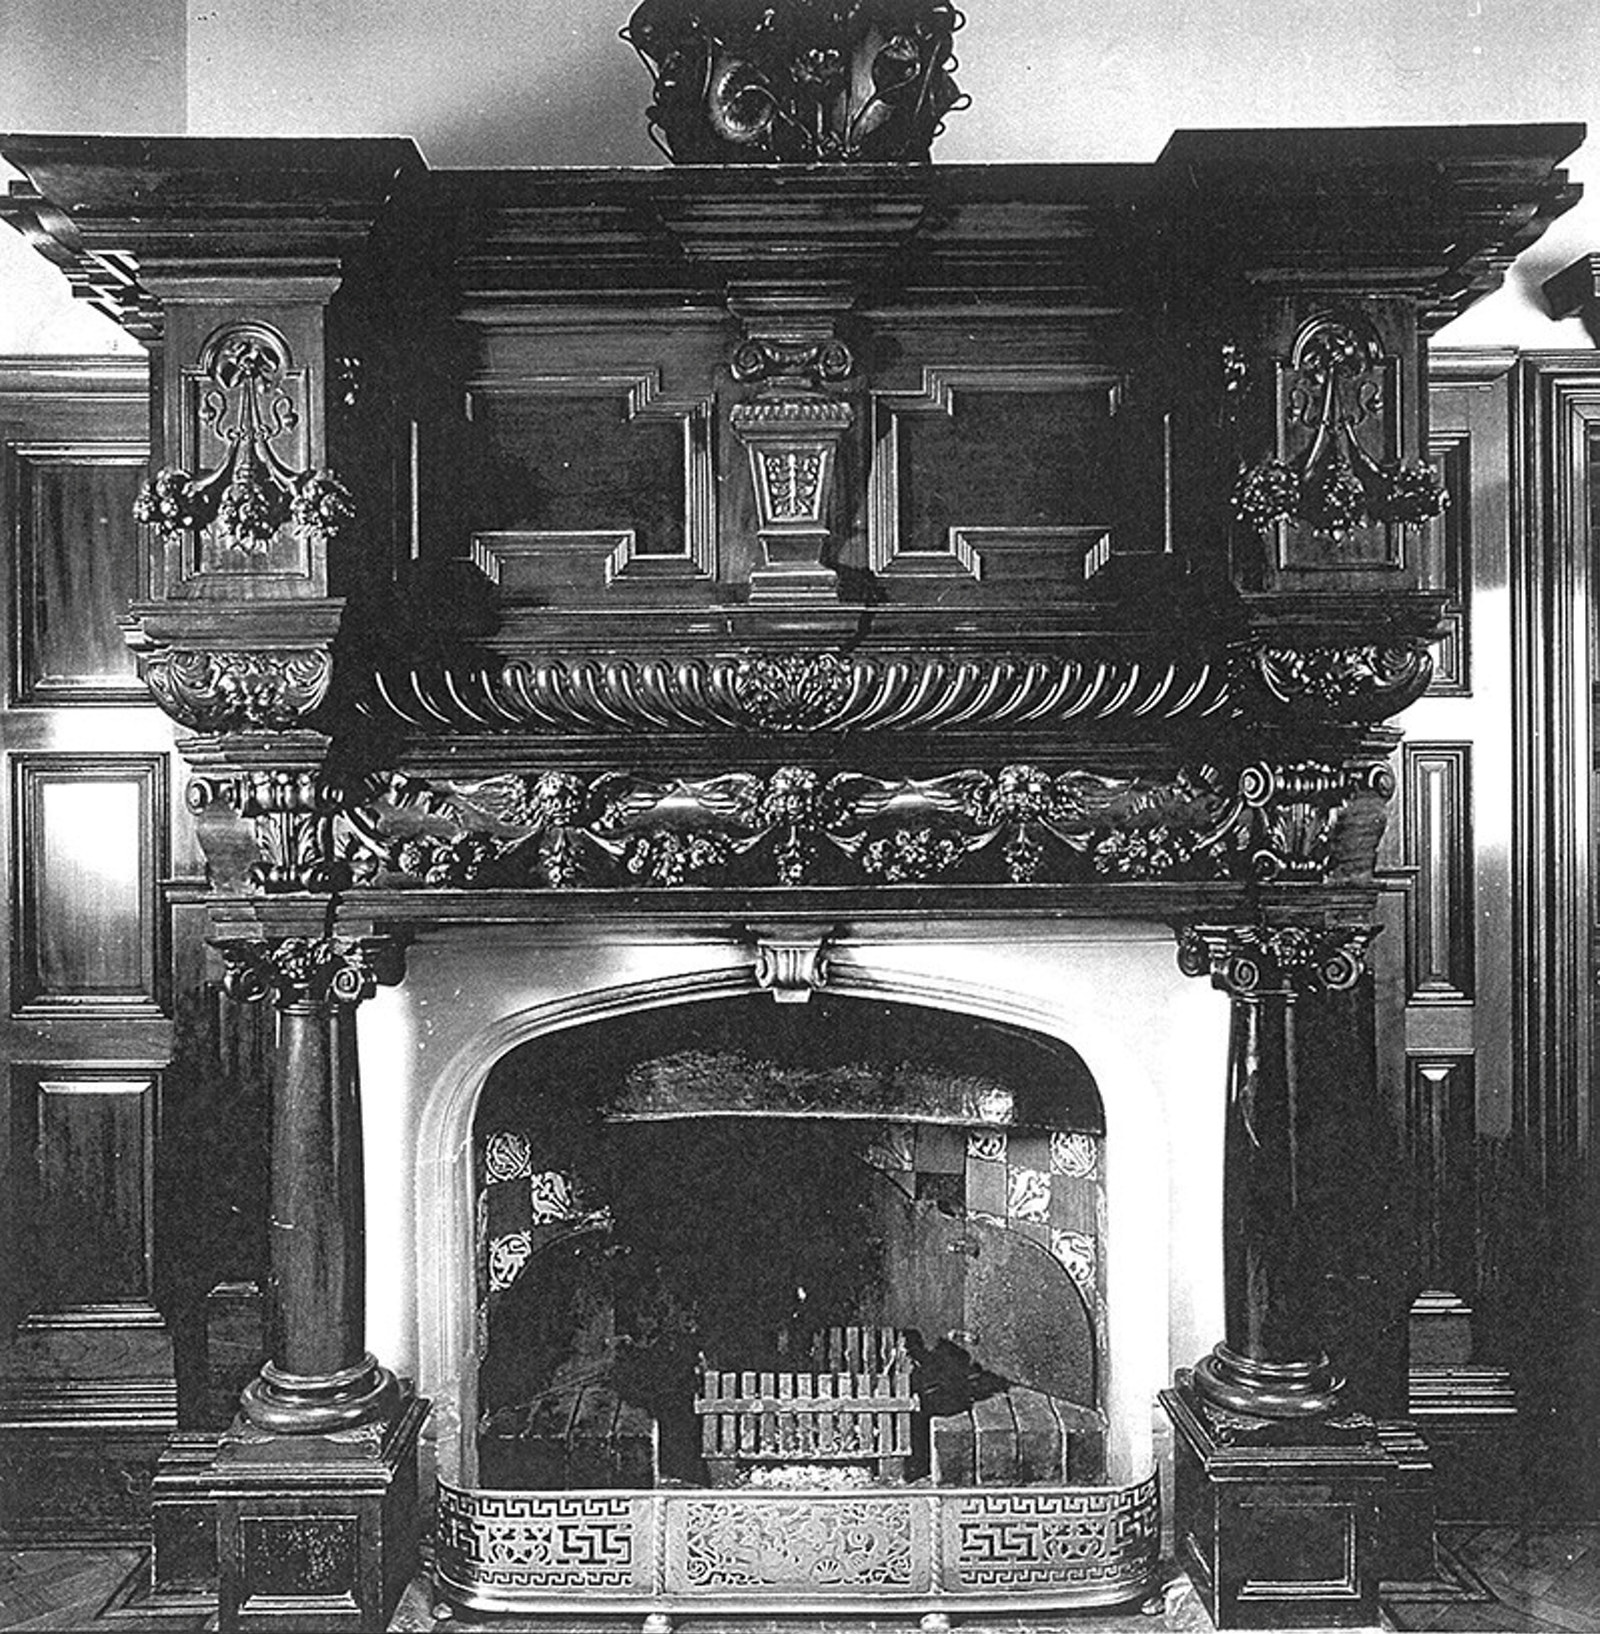 Entrance hall fireplace